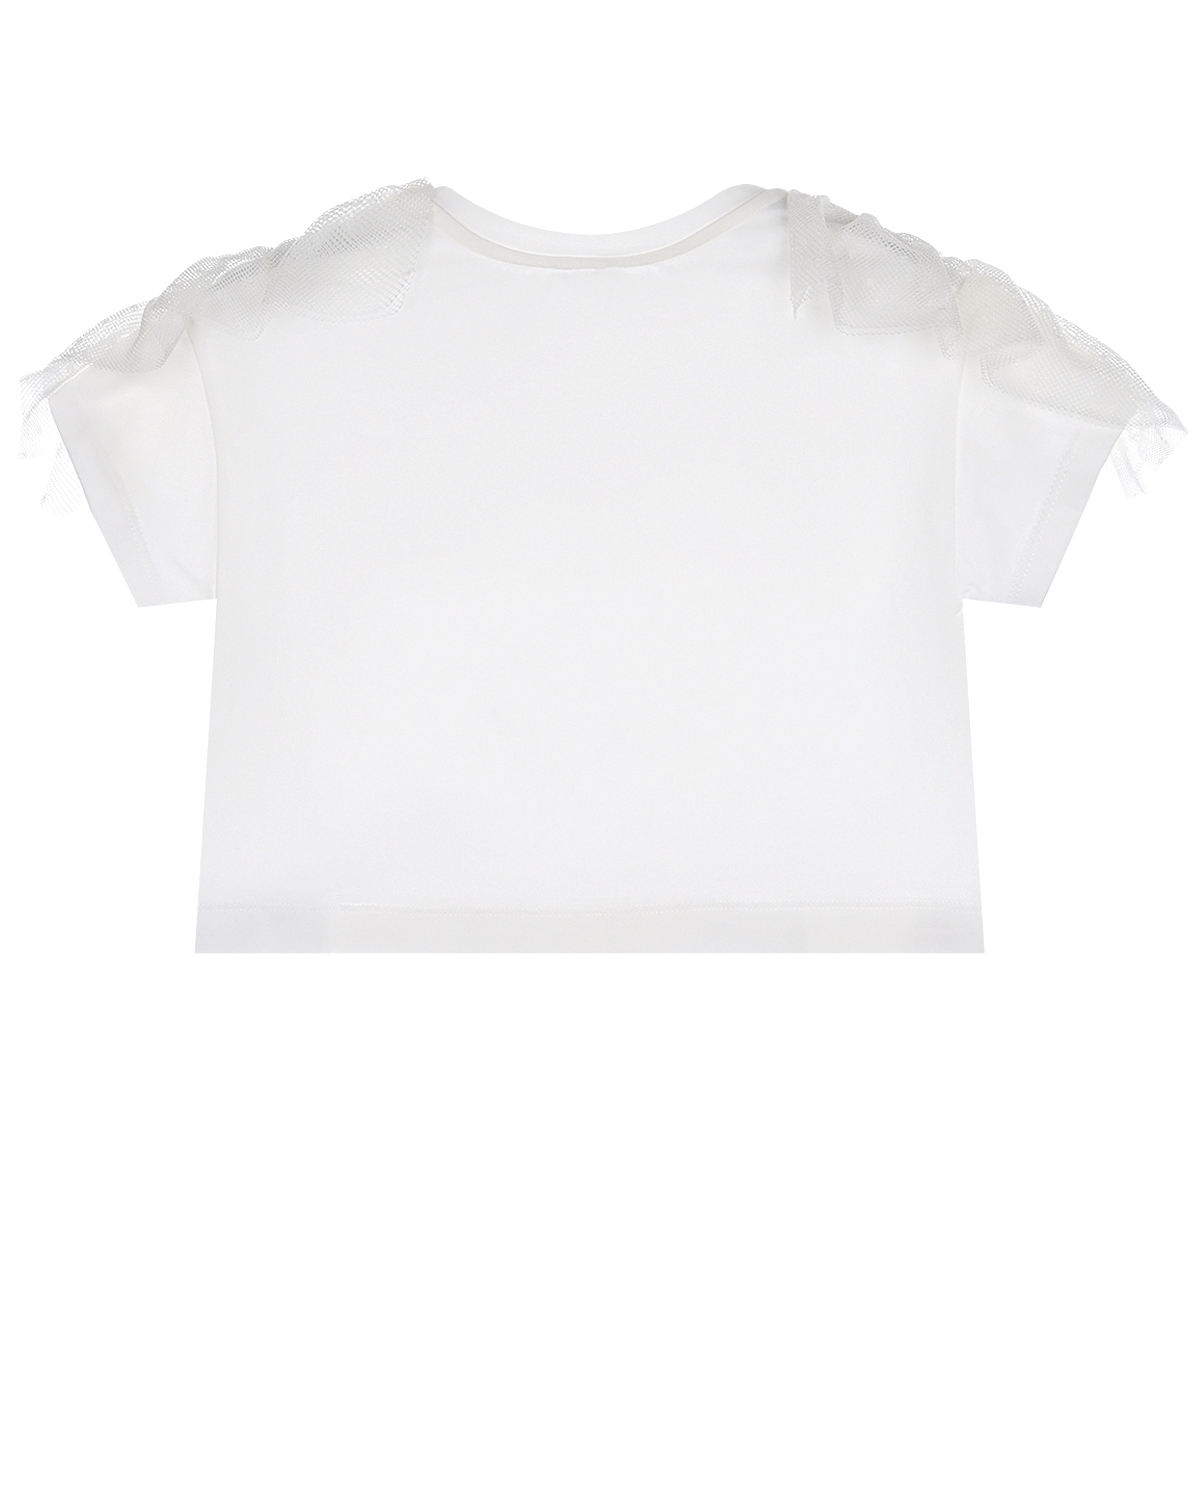 Белая укороченная футболка с оборками на рукавах Monnalisa детская, размер 128, цвет белый - фото 2